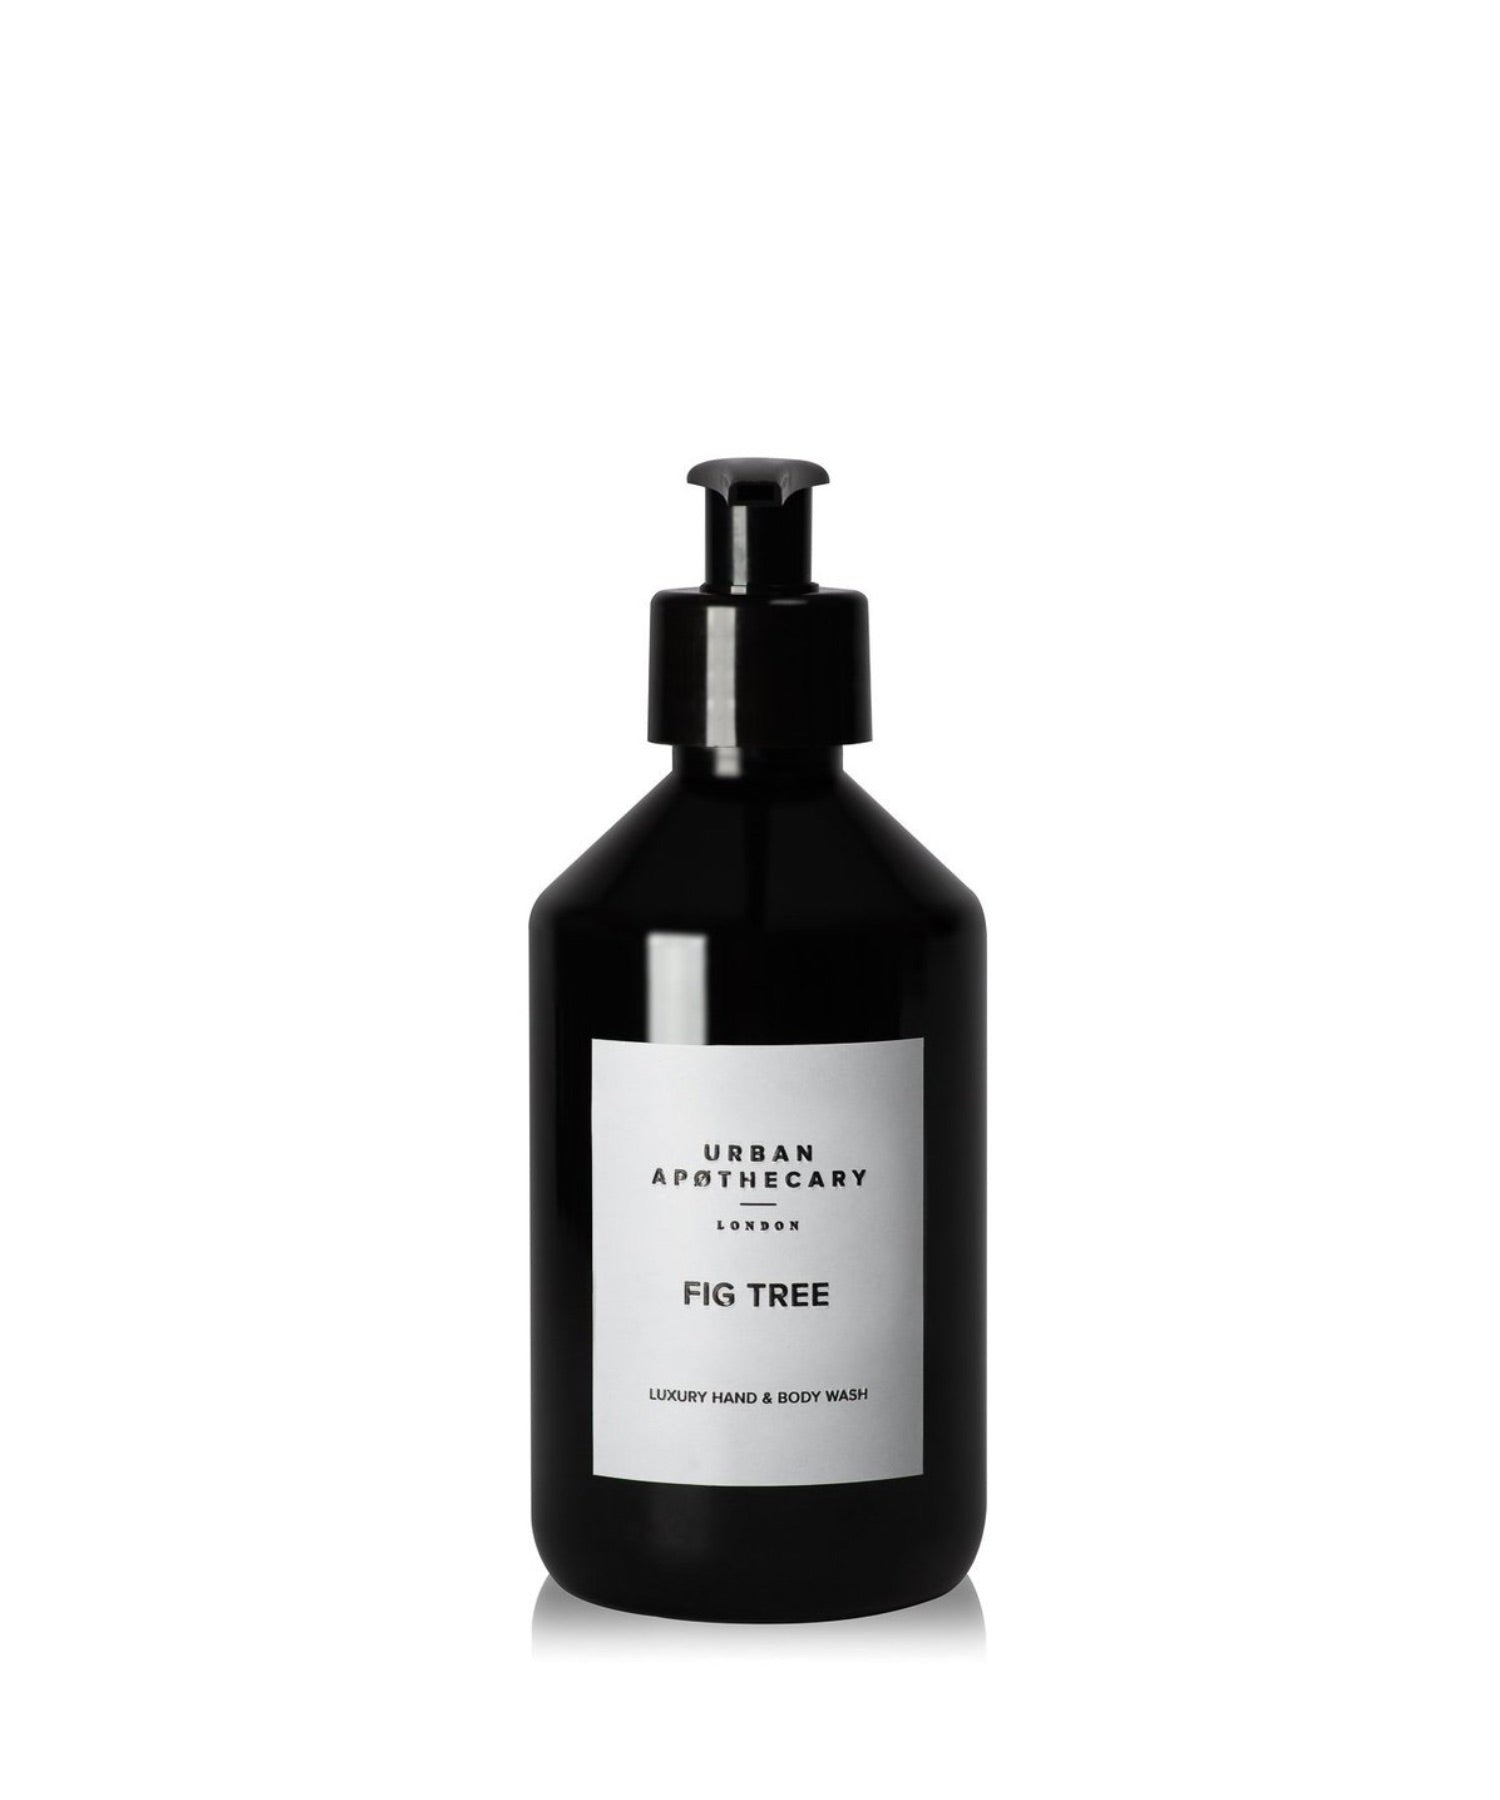 URBAN APOTHECARY Fig Tree Luxury Hand & Body Wash 300 ml.